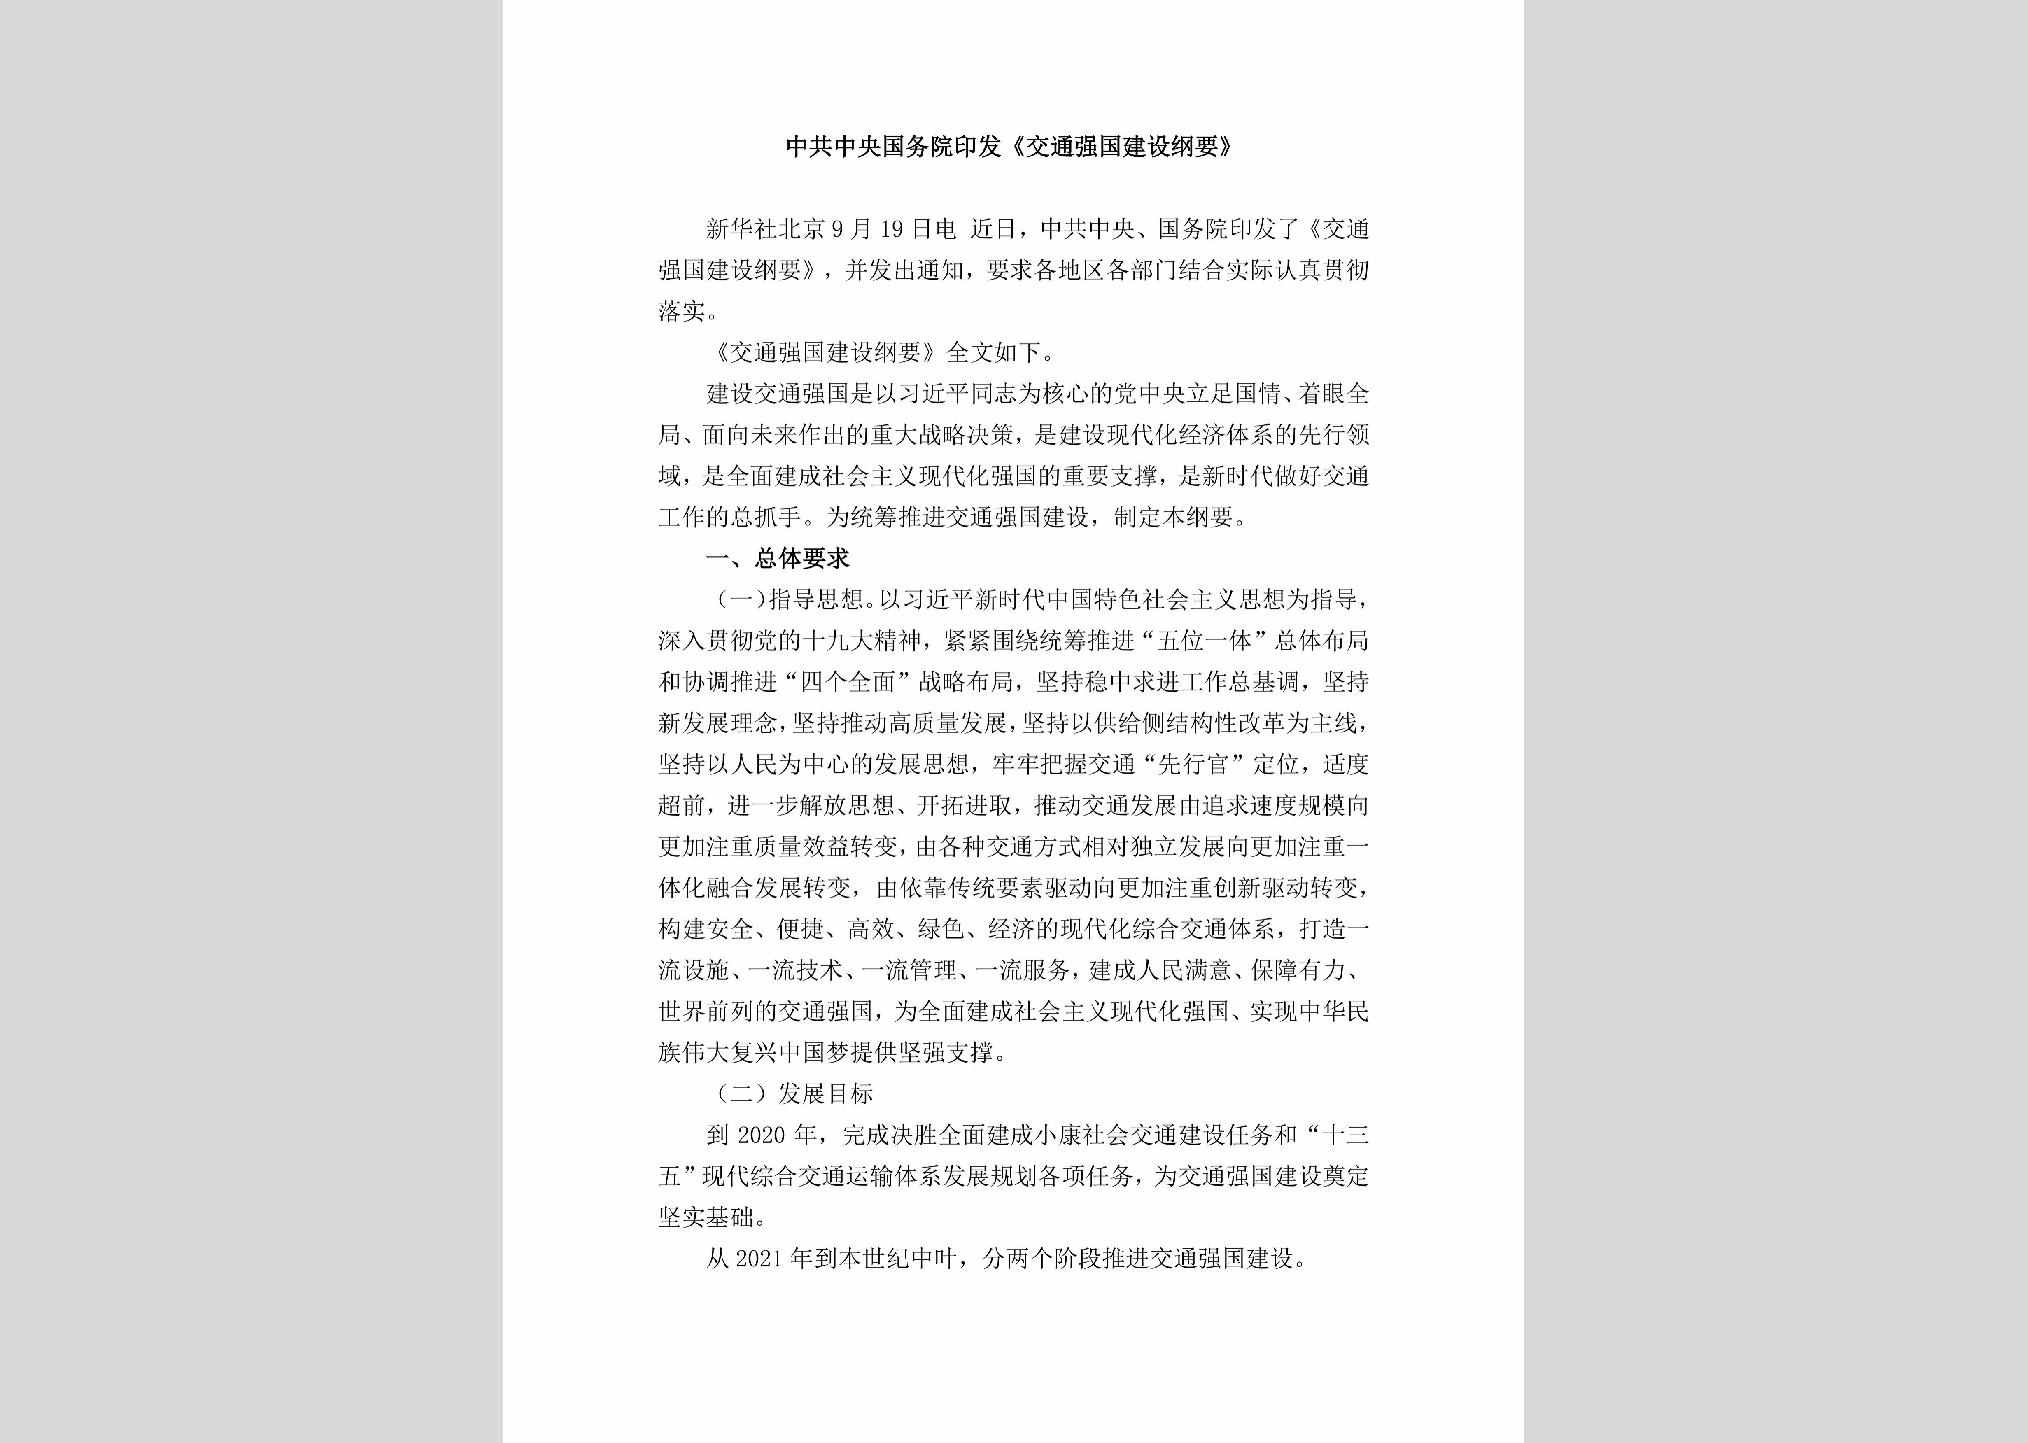 JTQGJSGY：中共中央国务院印发《交通强国建设纲要》